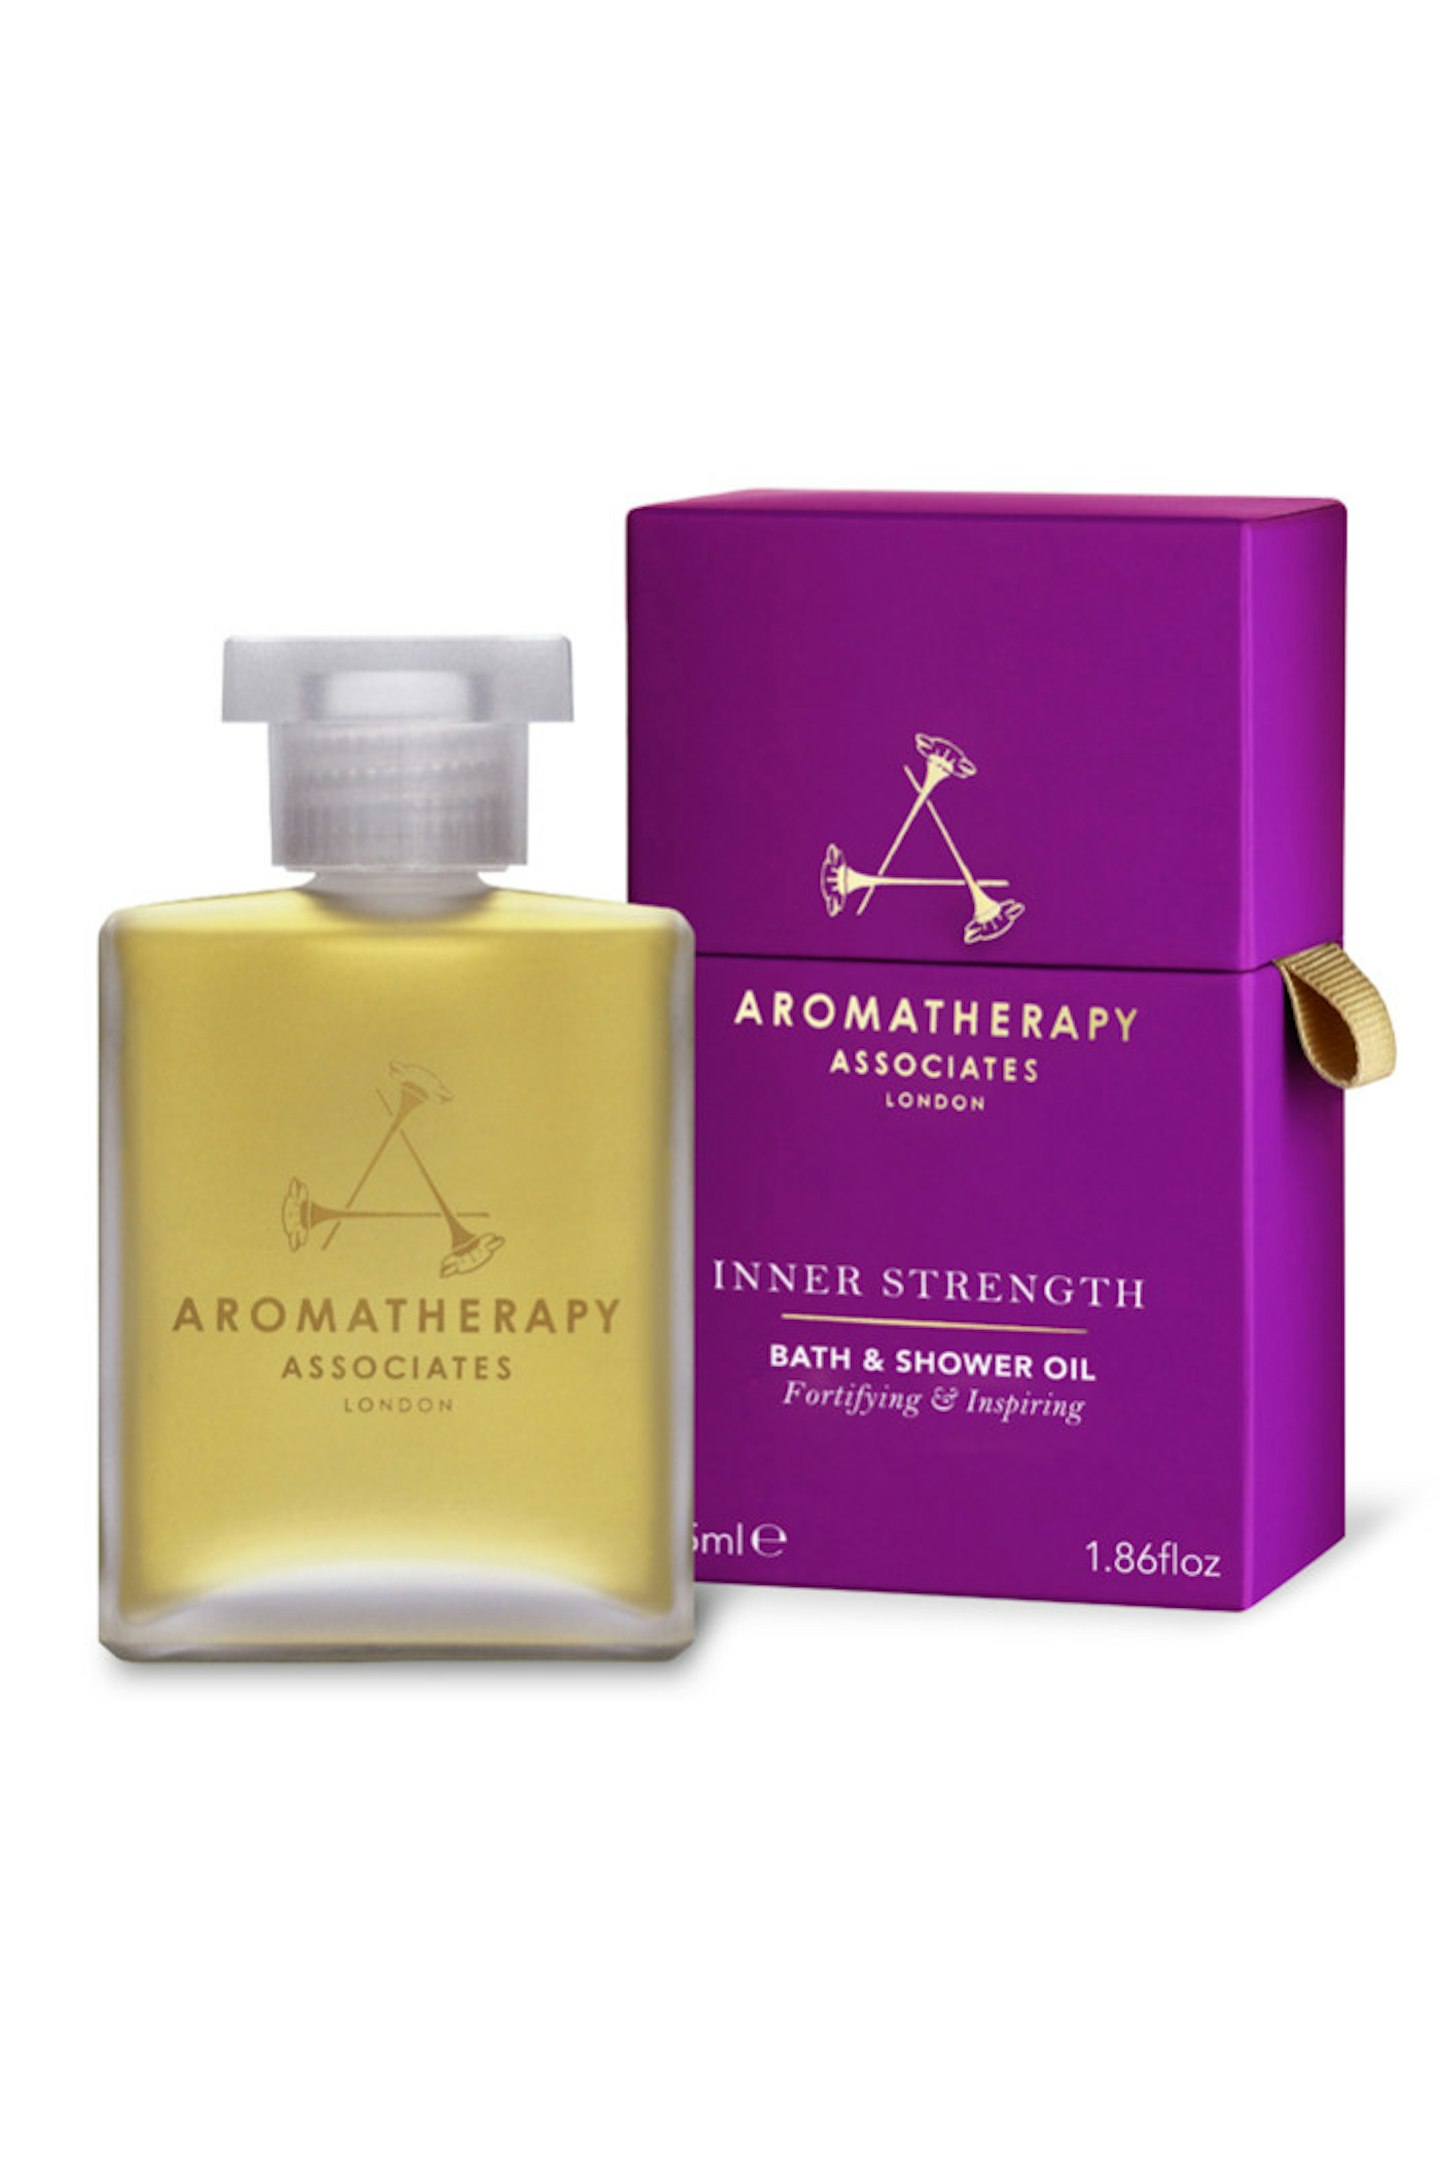 Aromatherapy Associates Inner Strength Bath & Shower Oil, £38.00